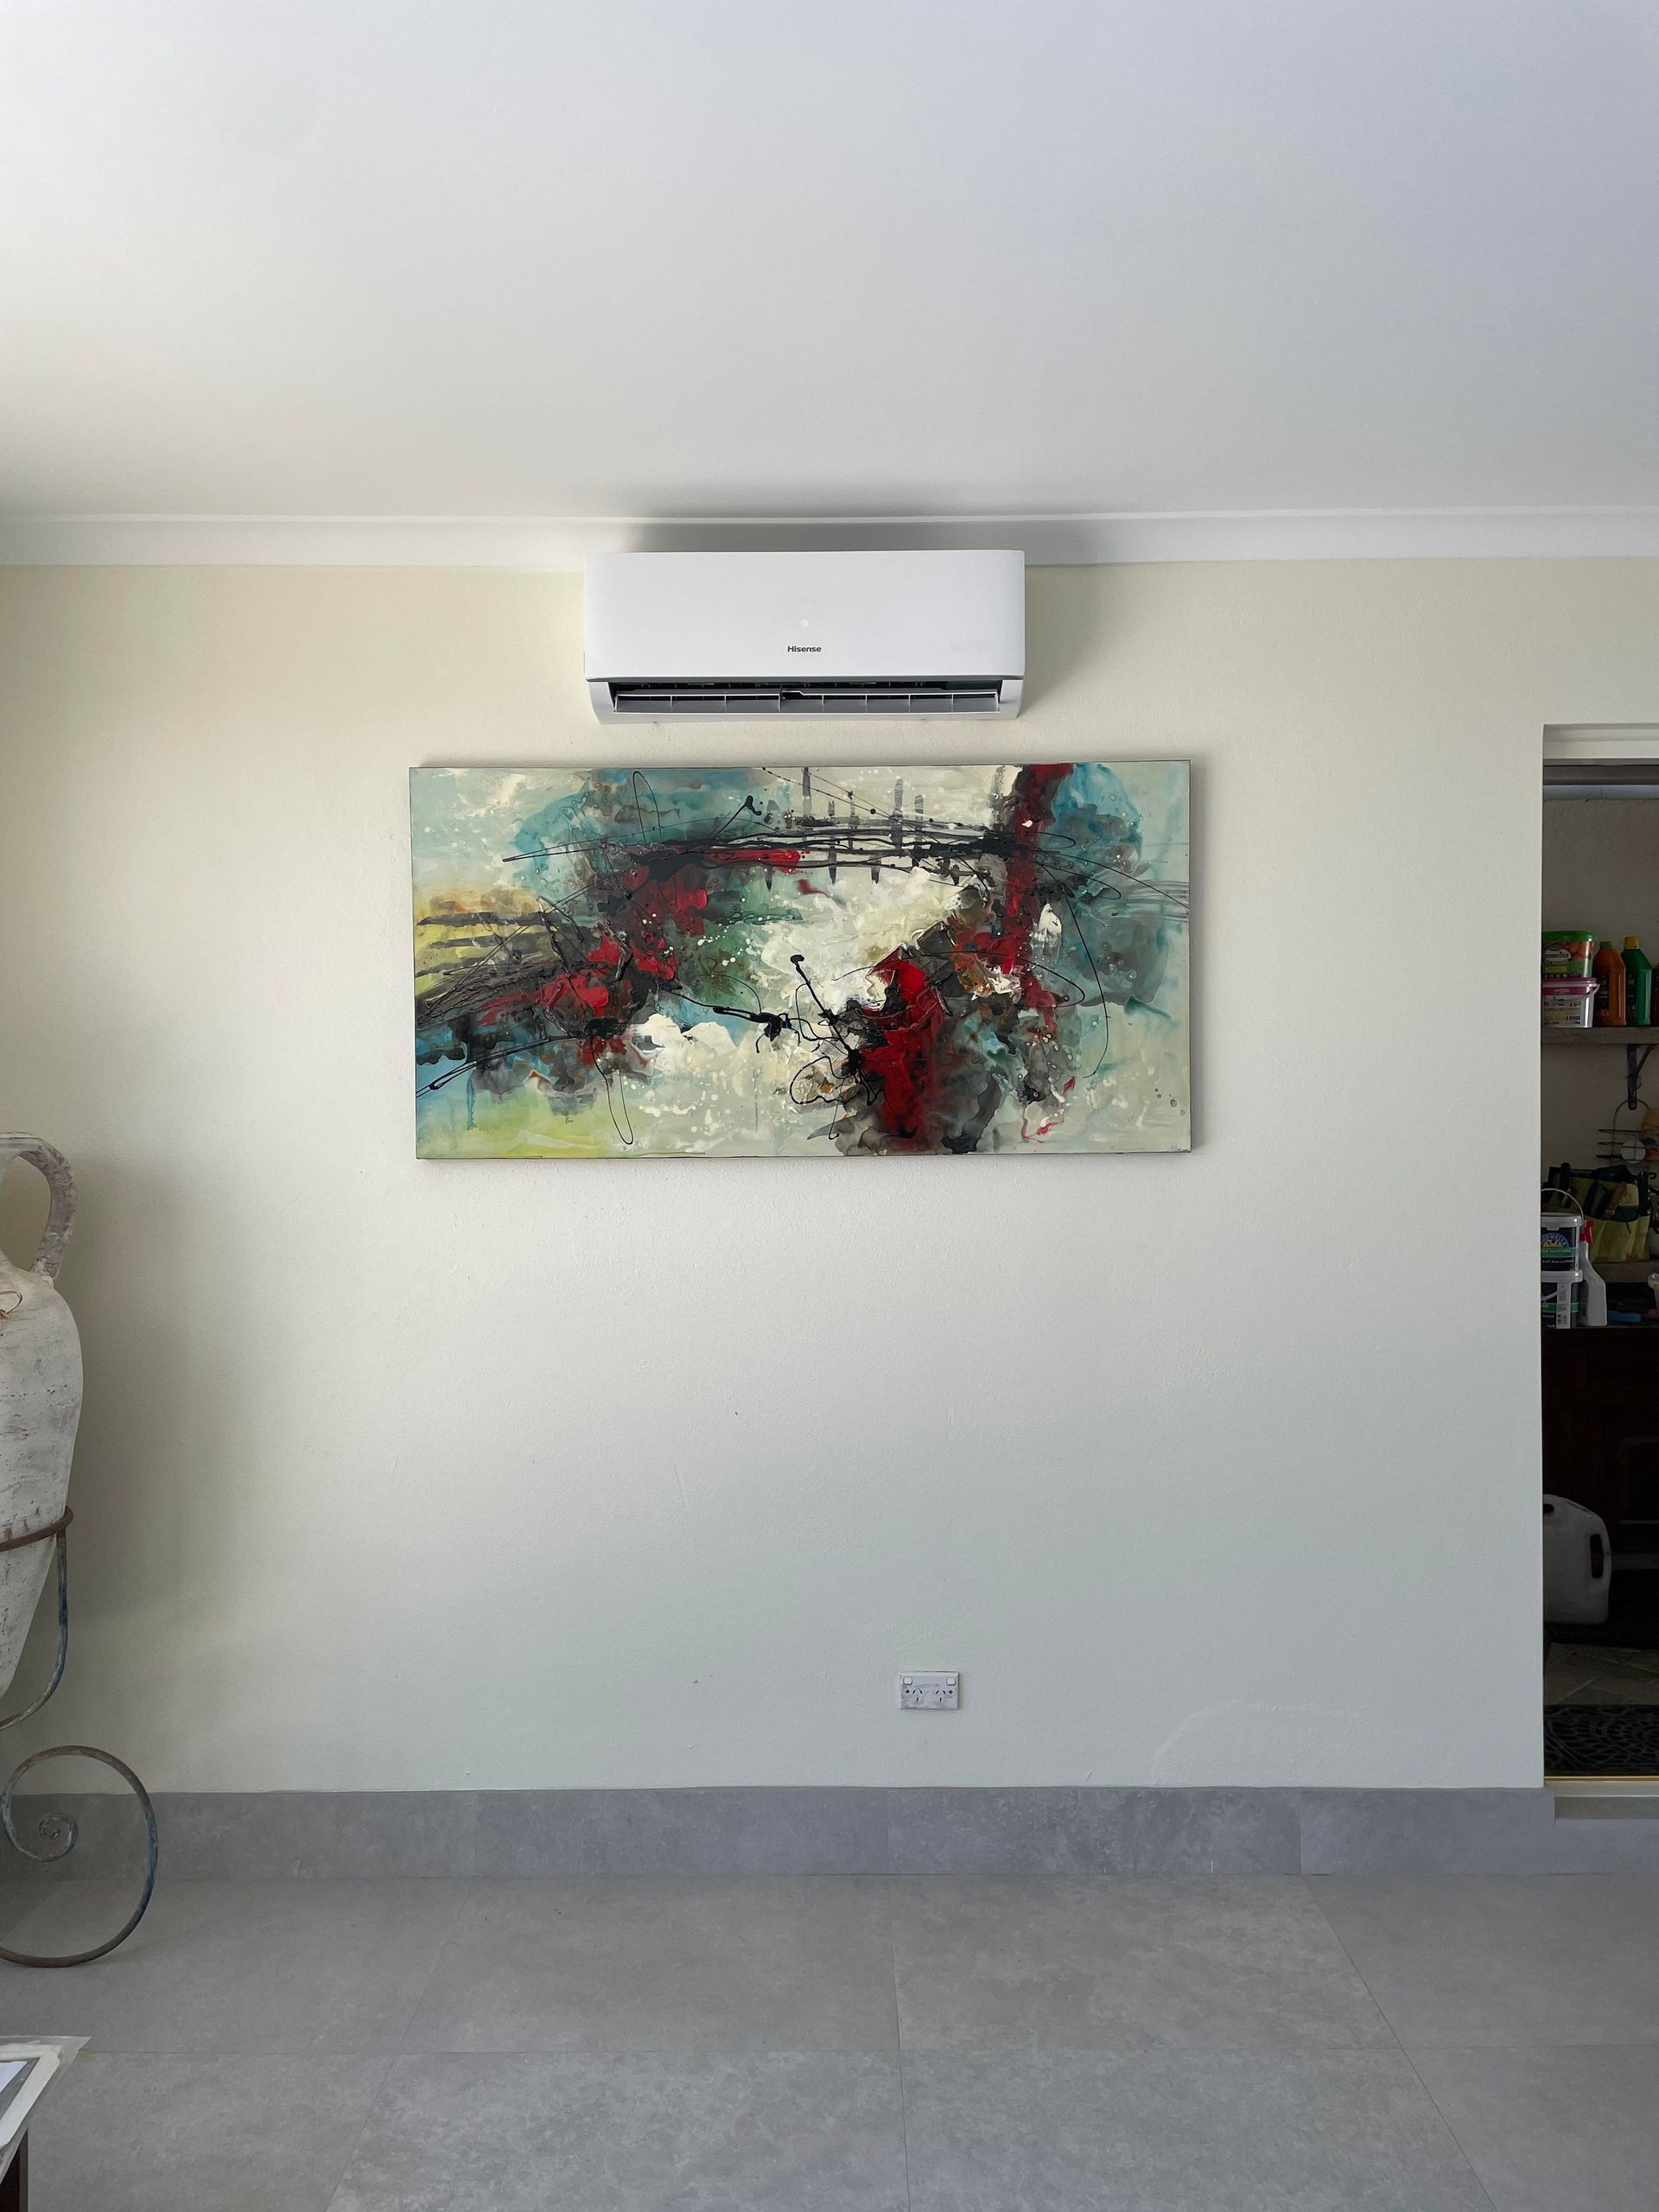 Internal Unit of Split System Air Conditioner Installed in Living Room